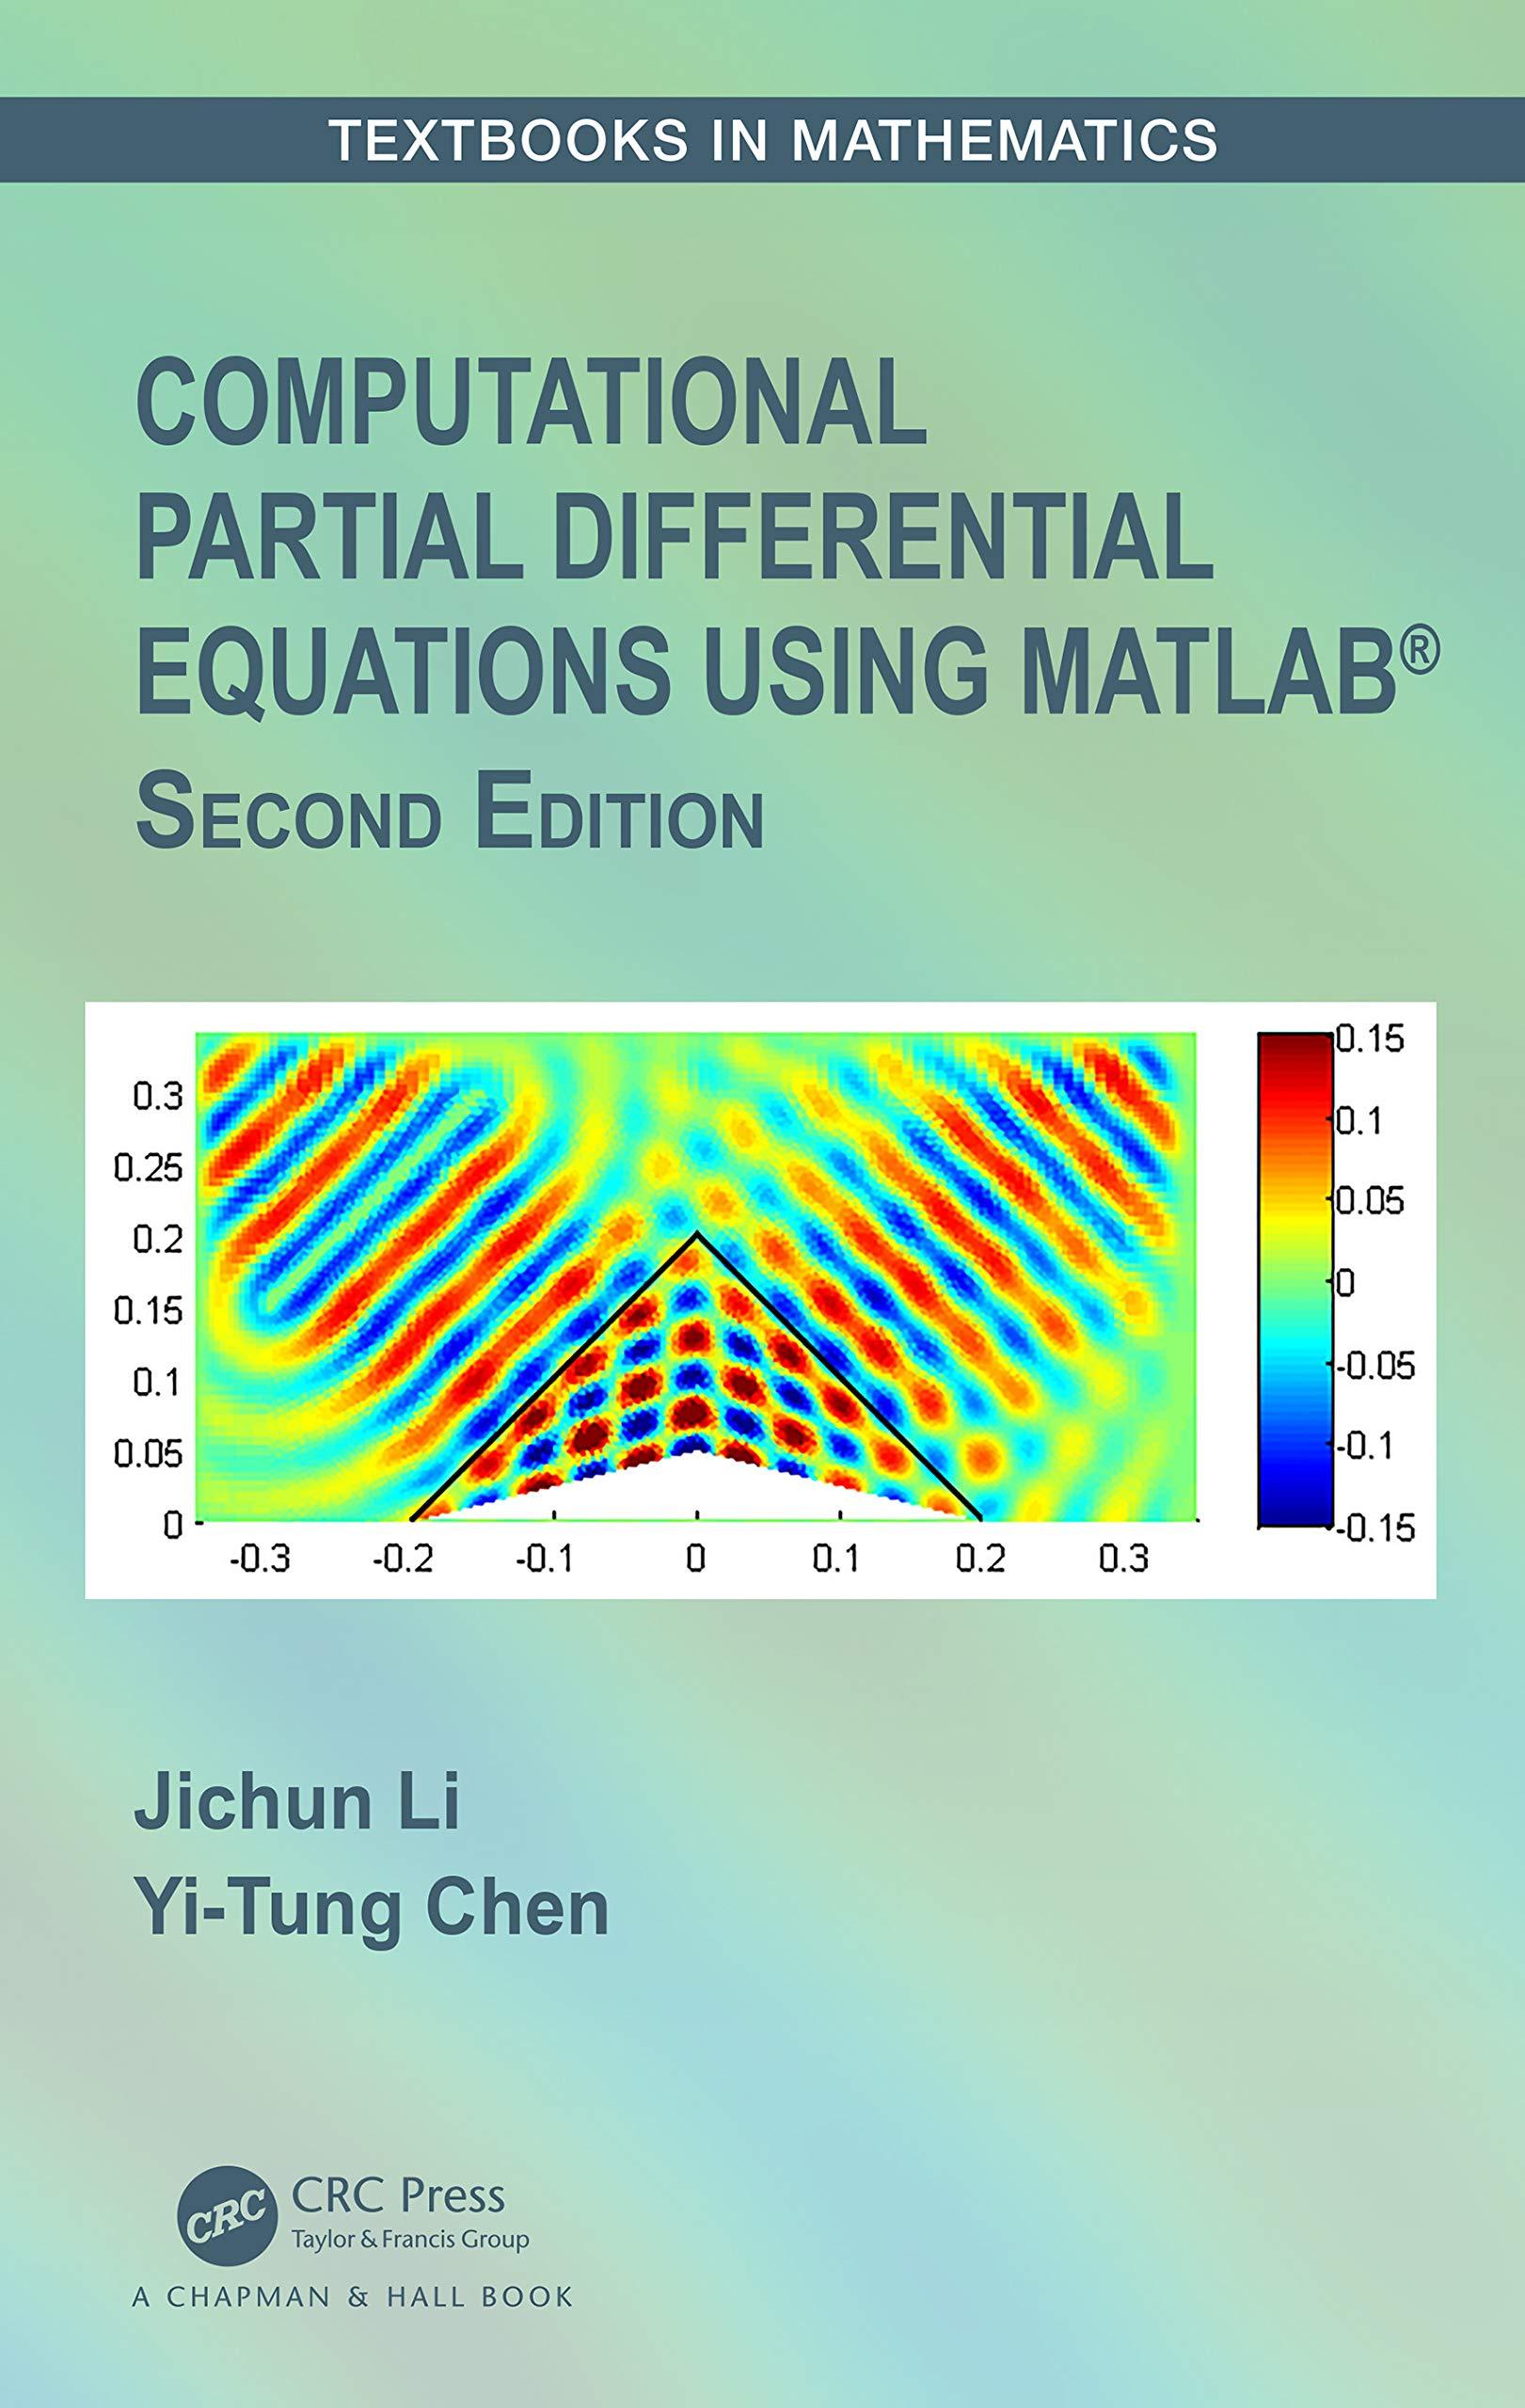 computational partial differential equations using matlab 2nd edition jichun li, yi-tung chen 0367217740,